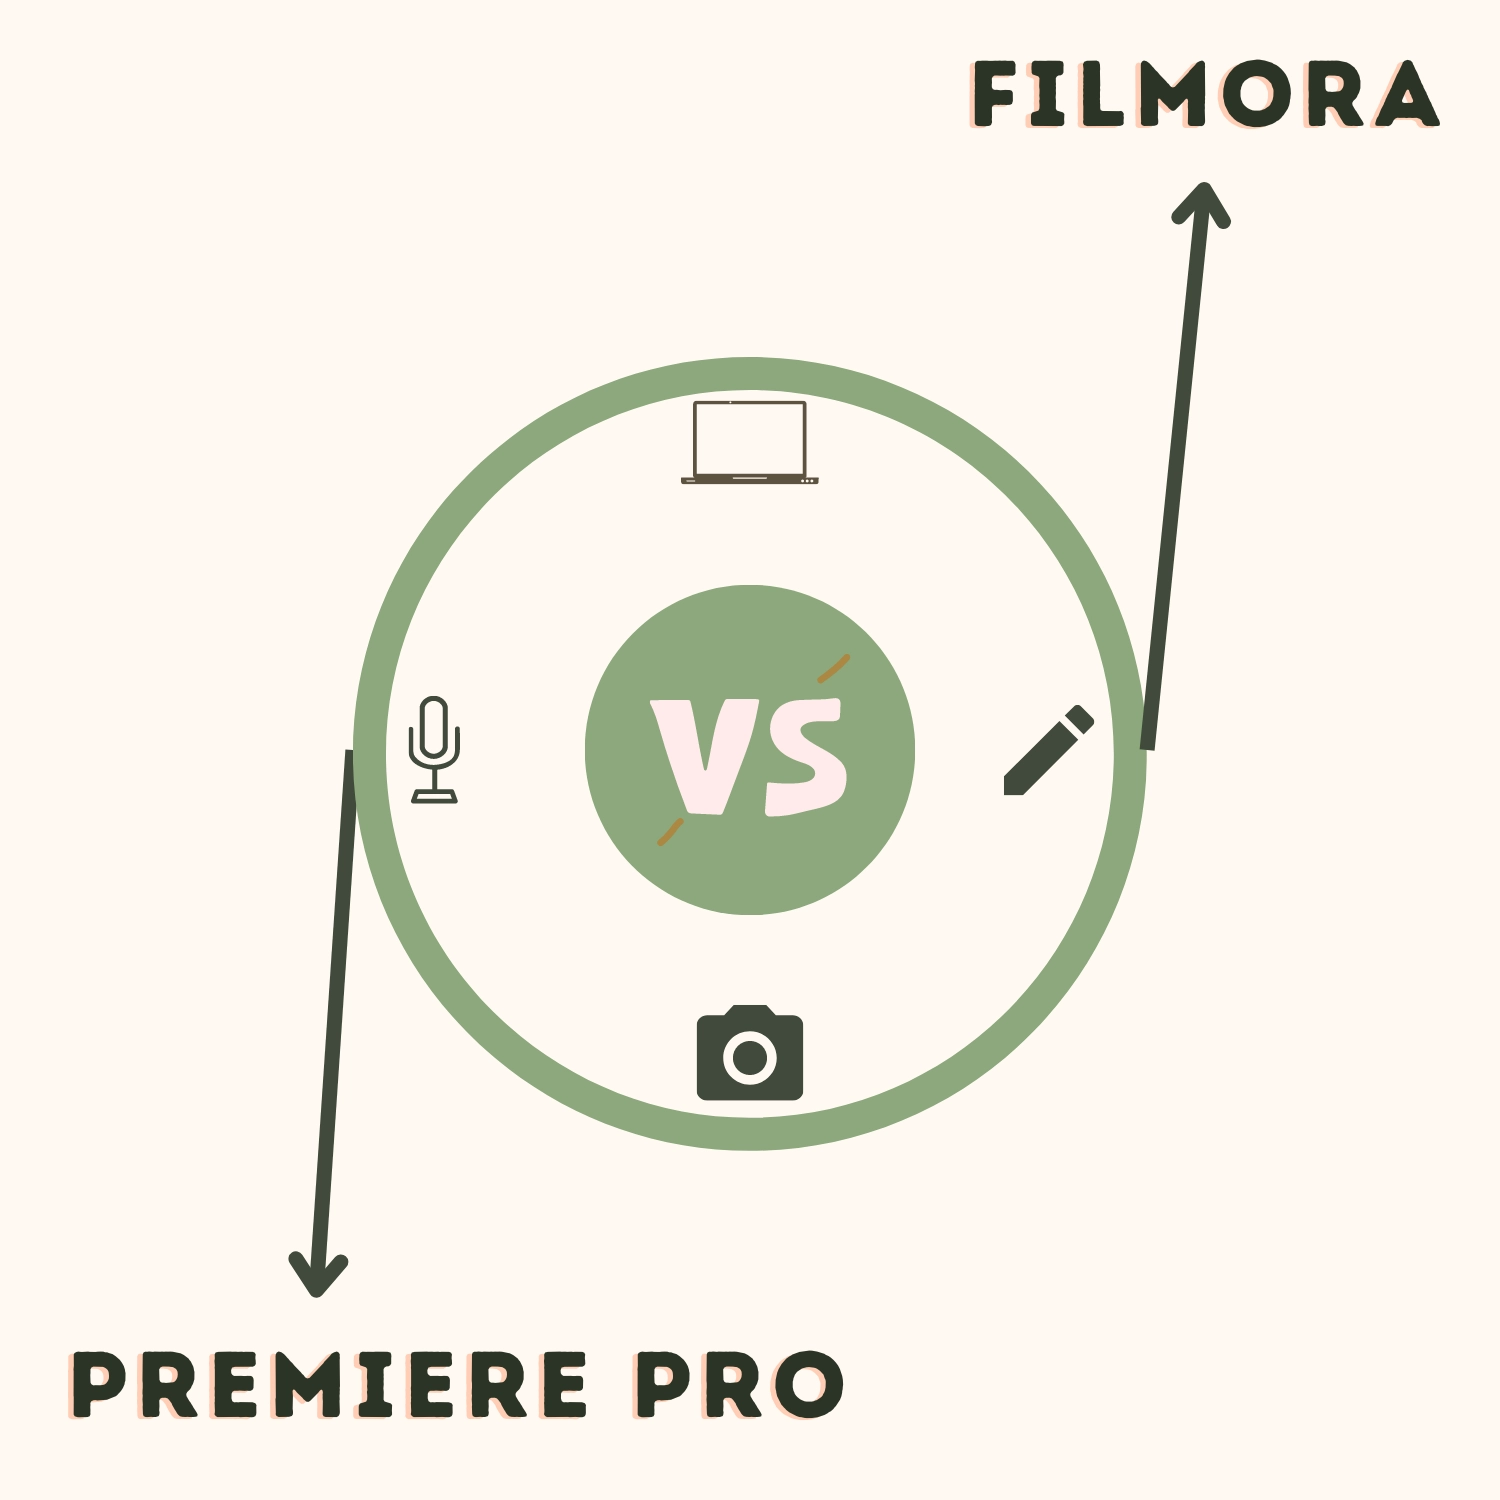 Filmora vs. Premiere Pro